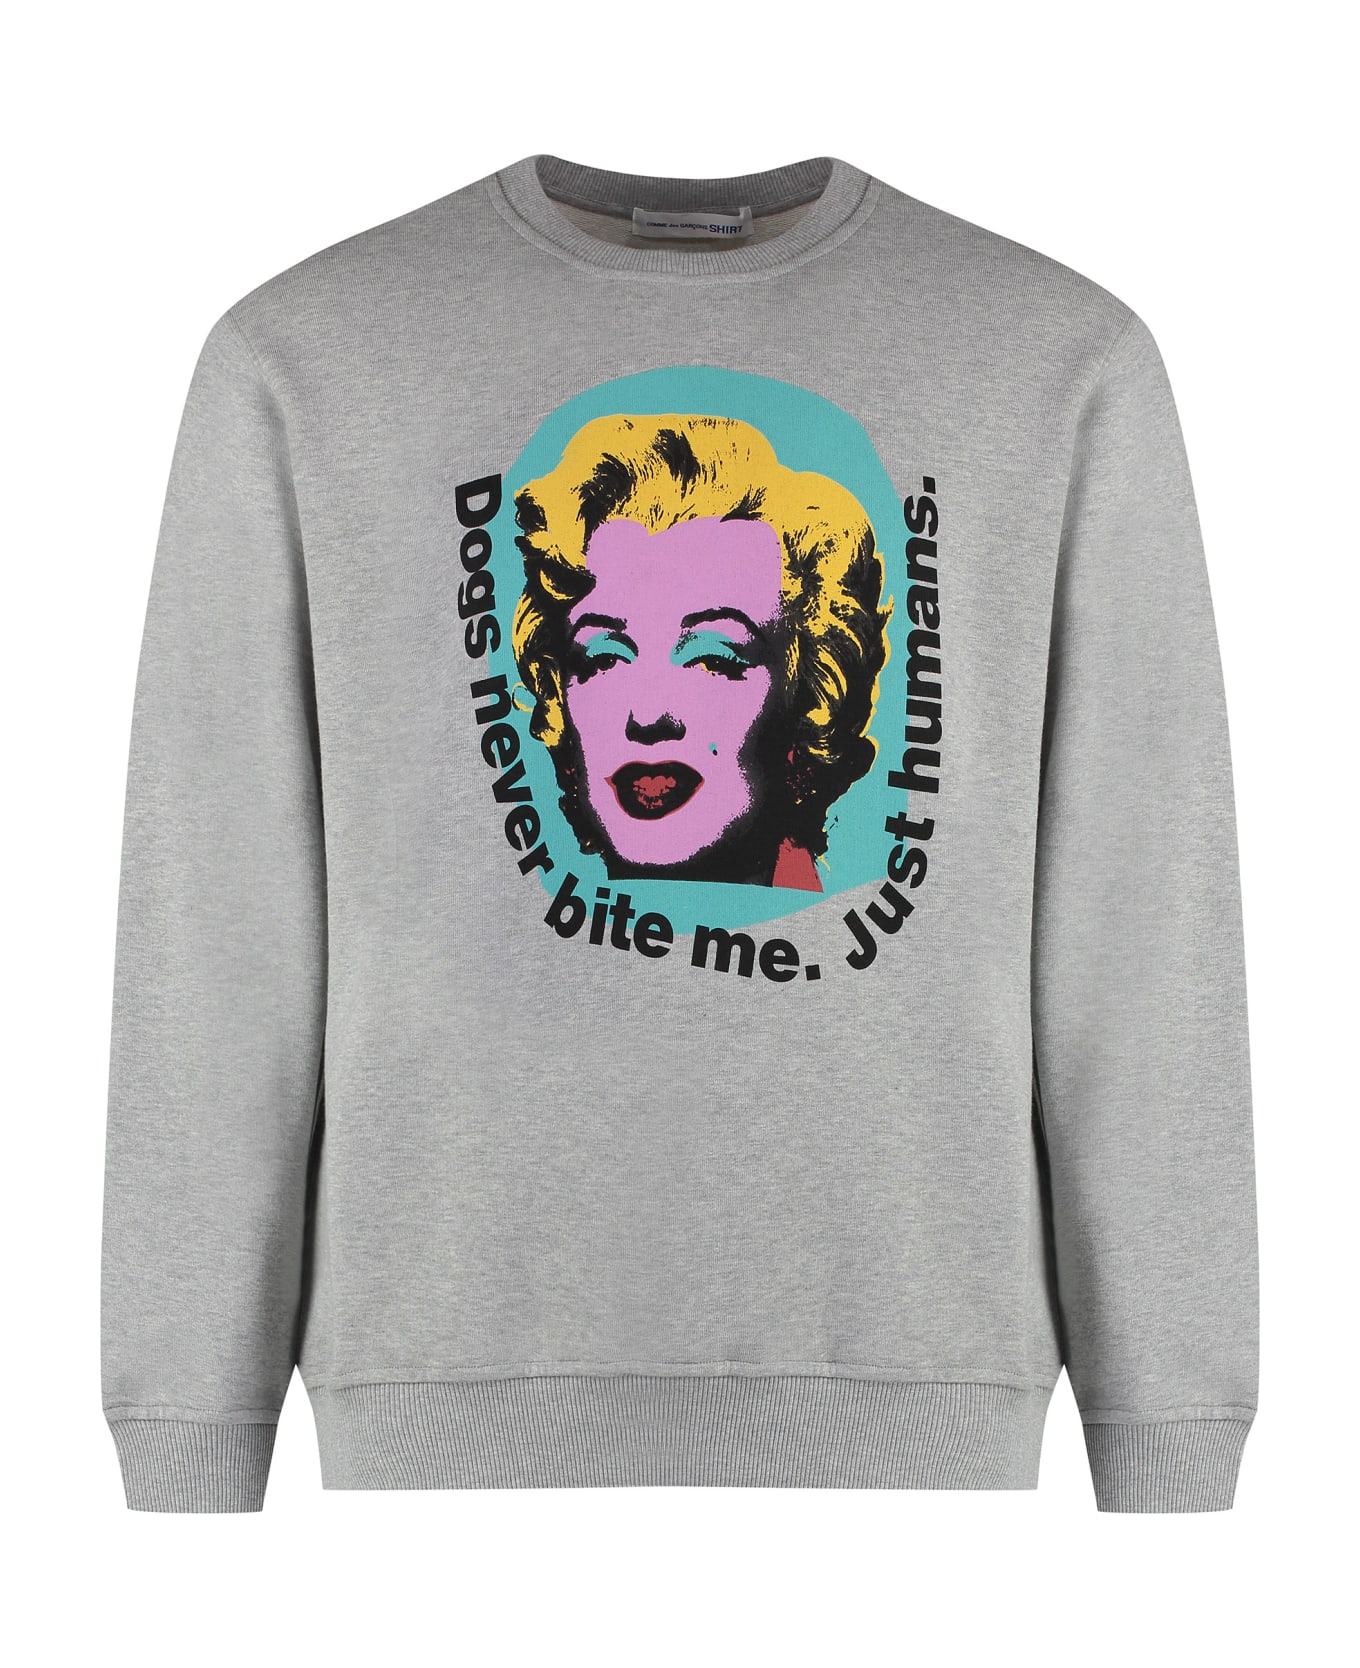 Comme des Garçons Shirt Andy Warhol Print Cotton Sweatshirt - grey